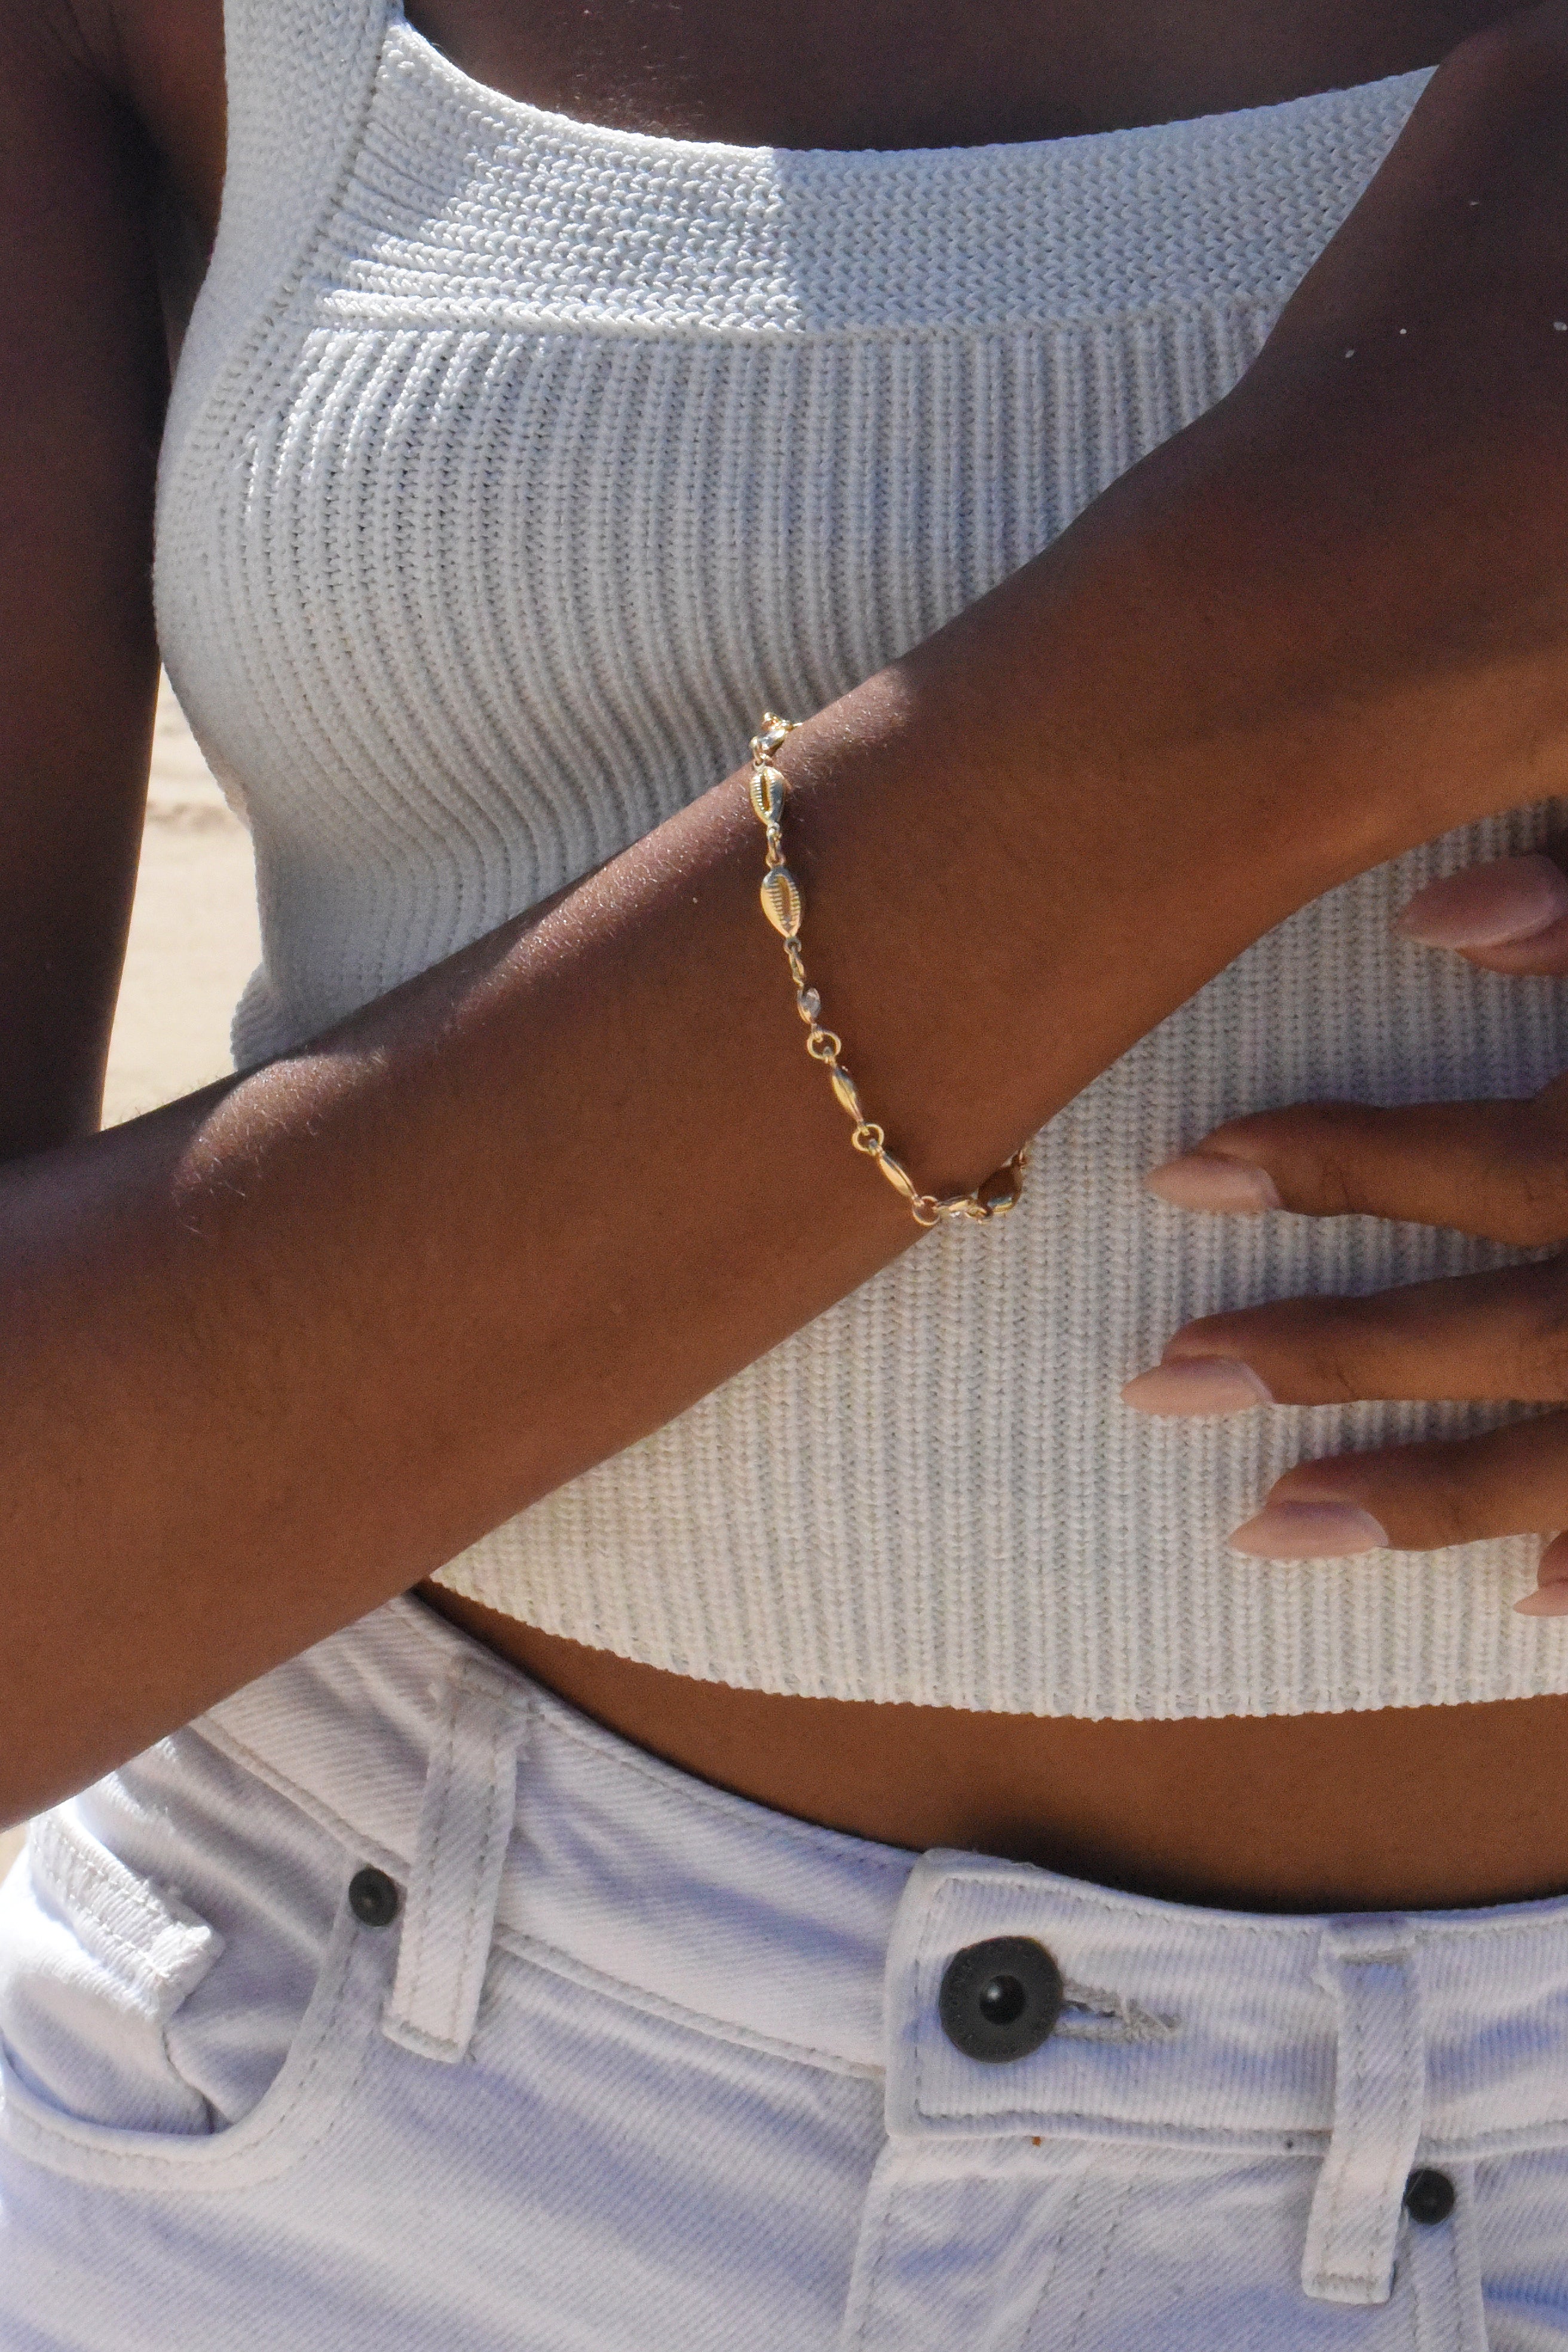 Cute Gold Bracelet - Cowrie Shell Bracelet - Adjustable Bracelet - Lulus